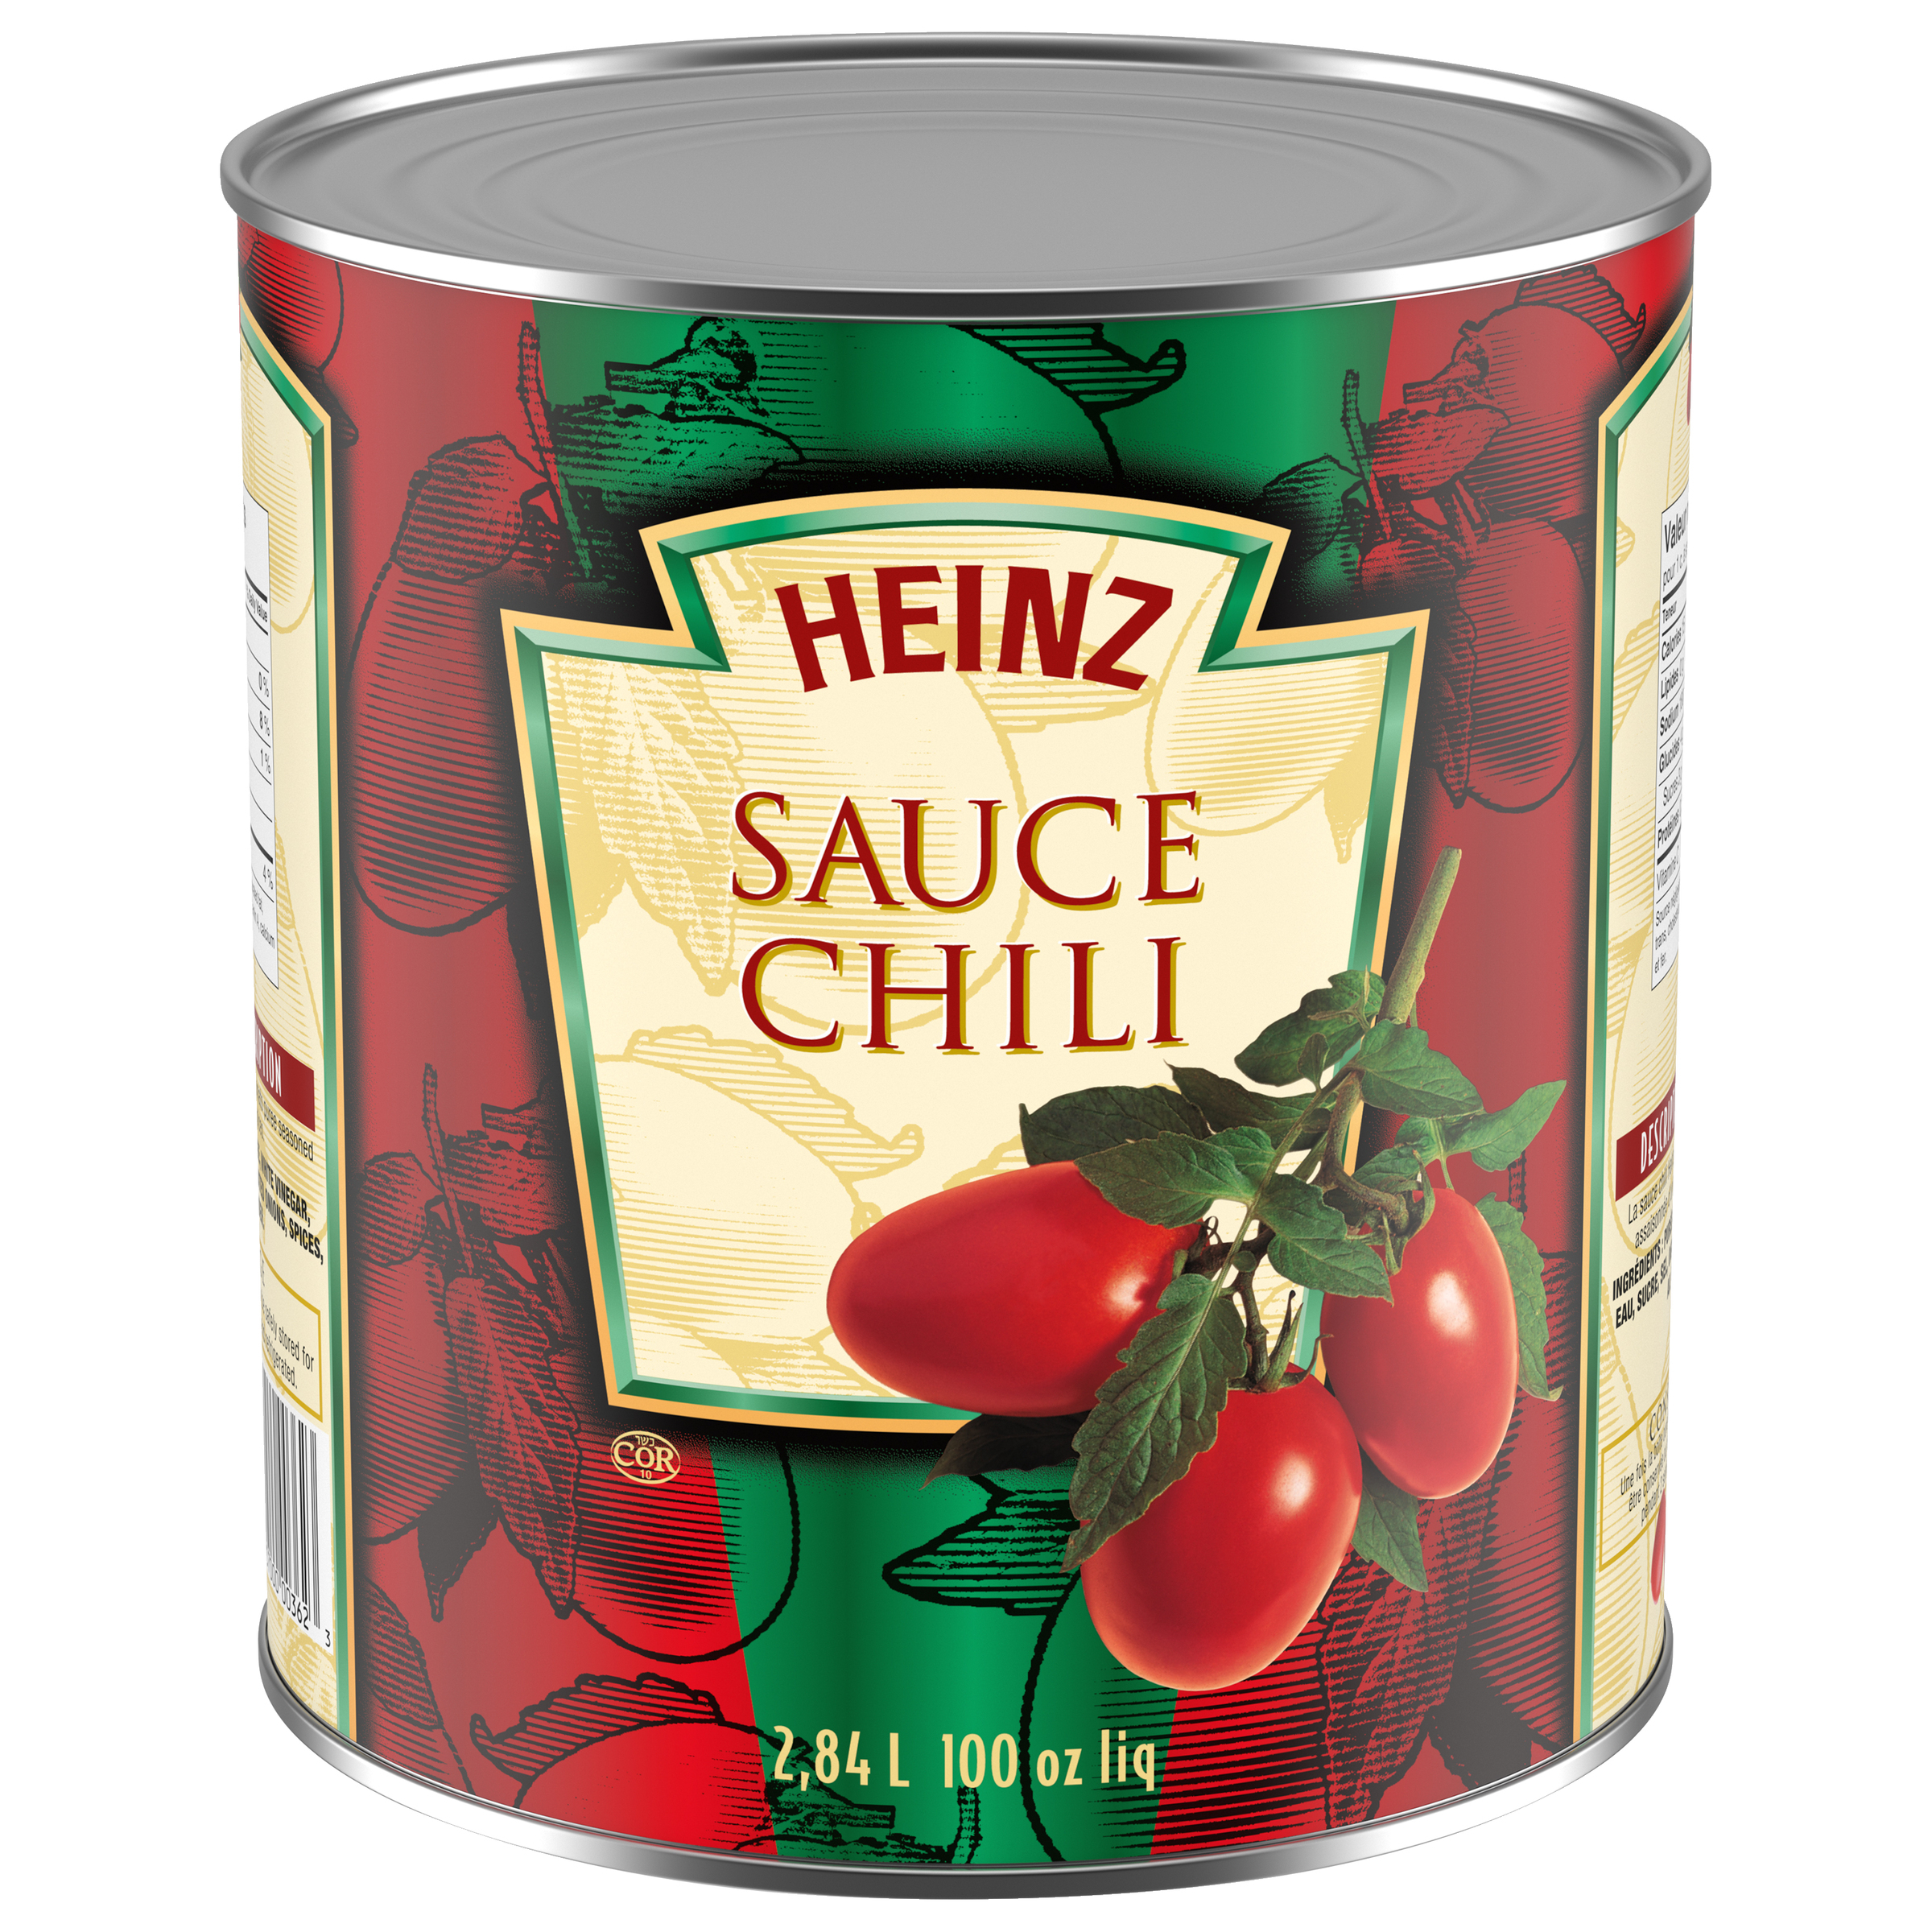 HEINZ Chili Sauce 2.84L 6